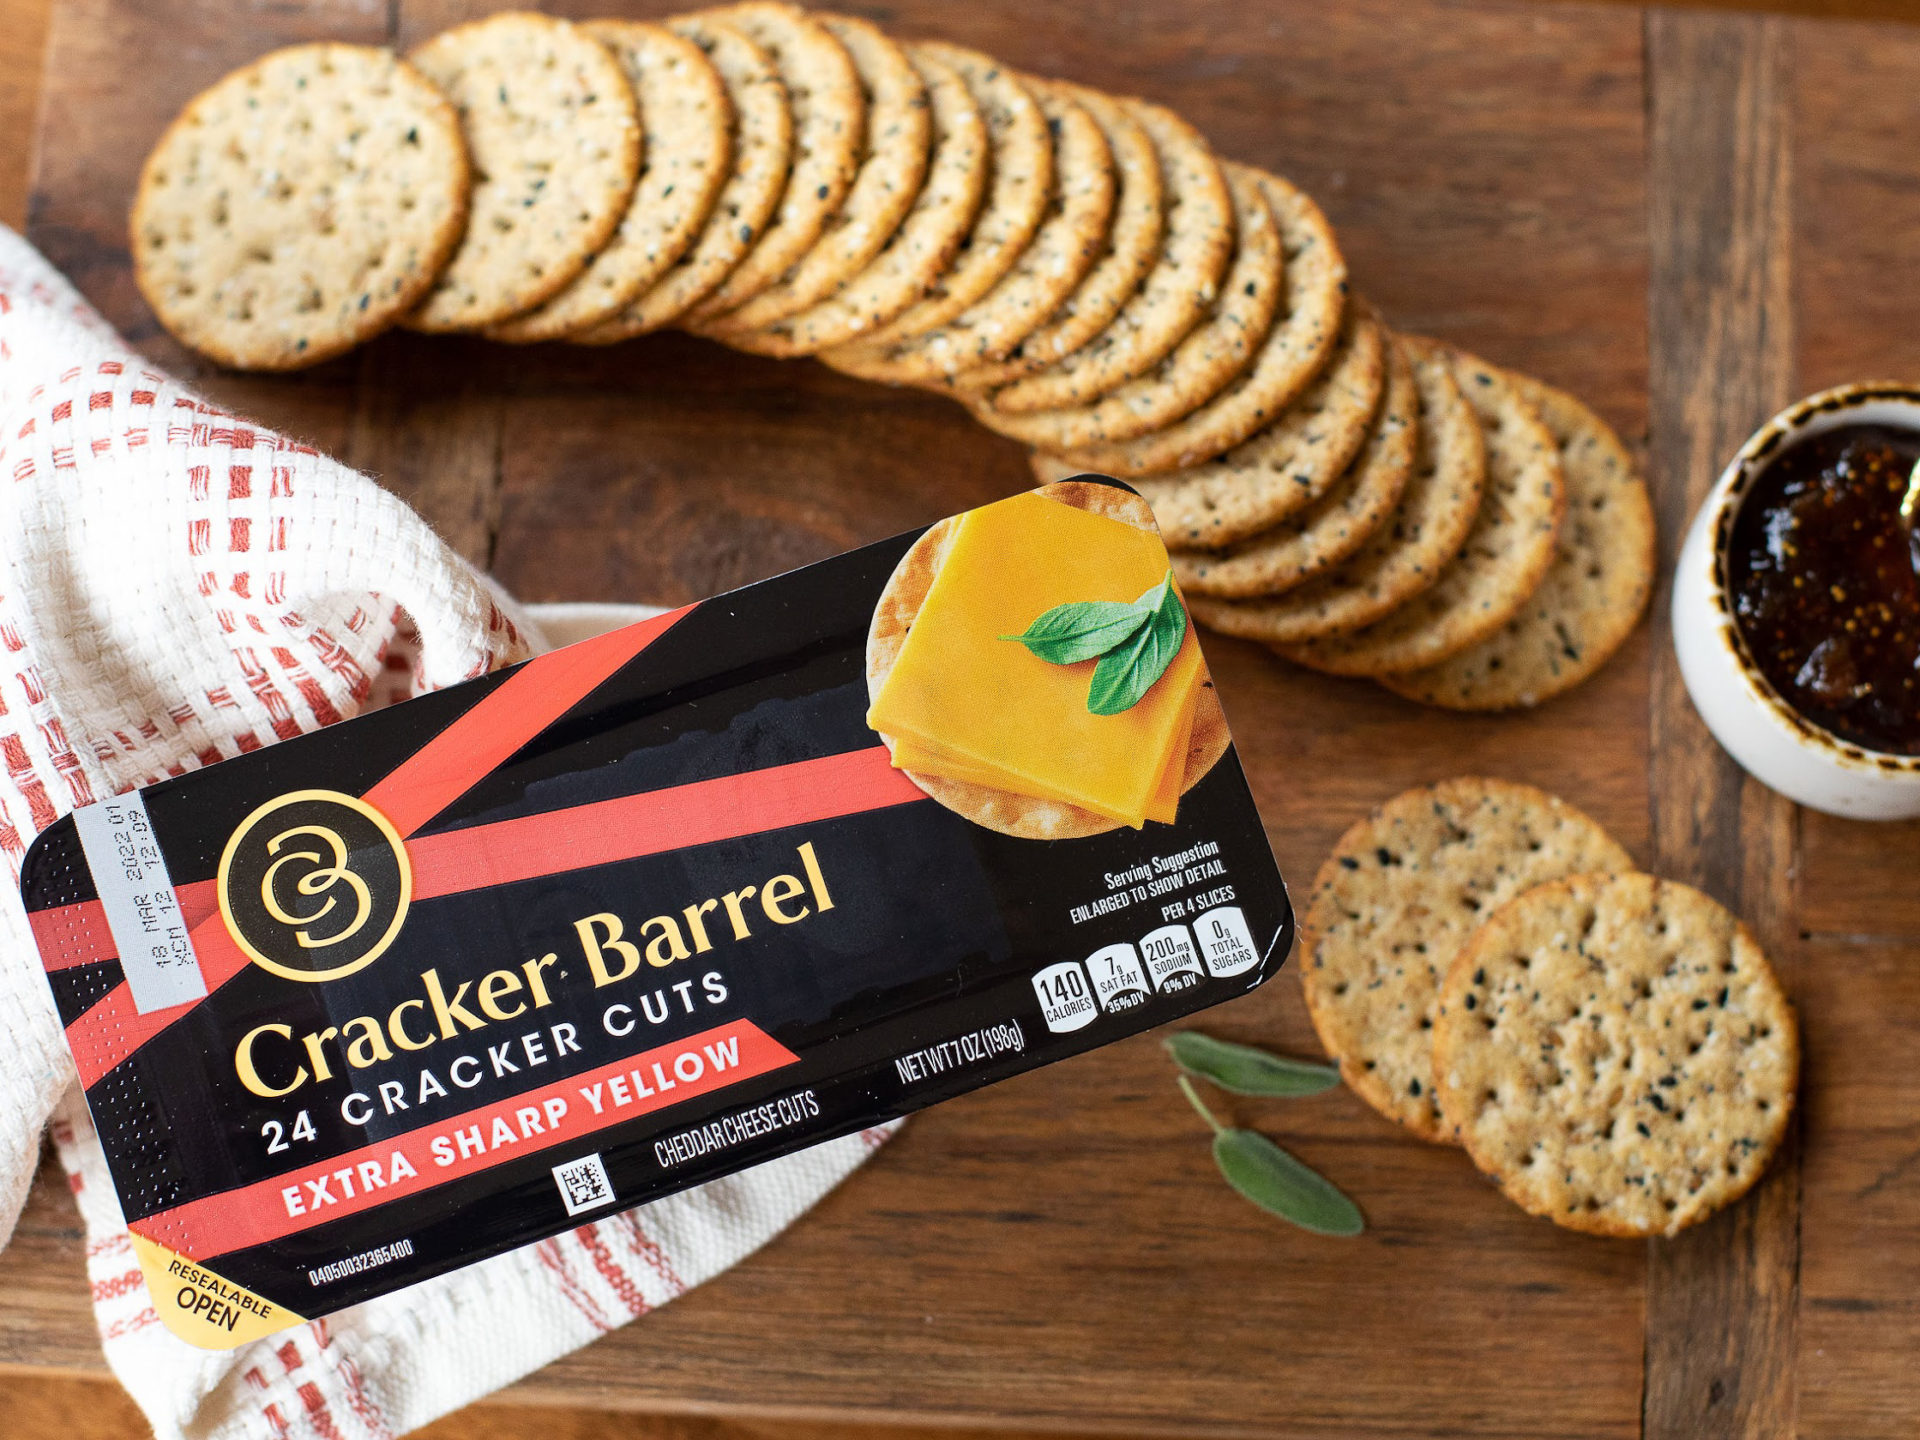 Cracker Barrel Cracker Cuts Just $2.49 At Kroger (Regular Price $6.49)